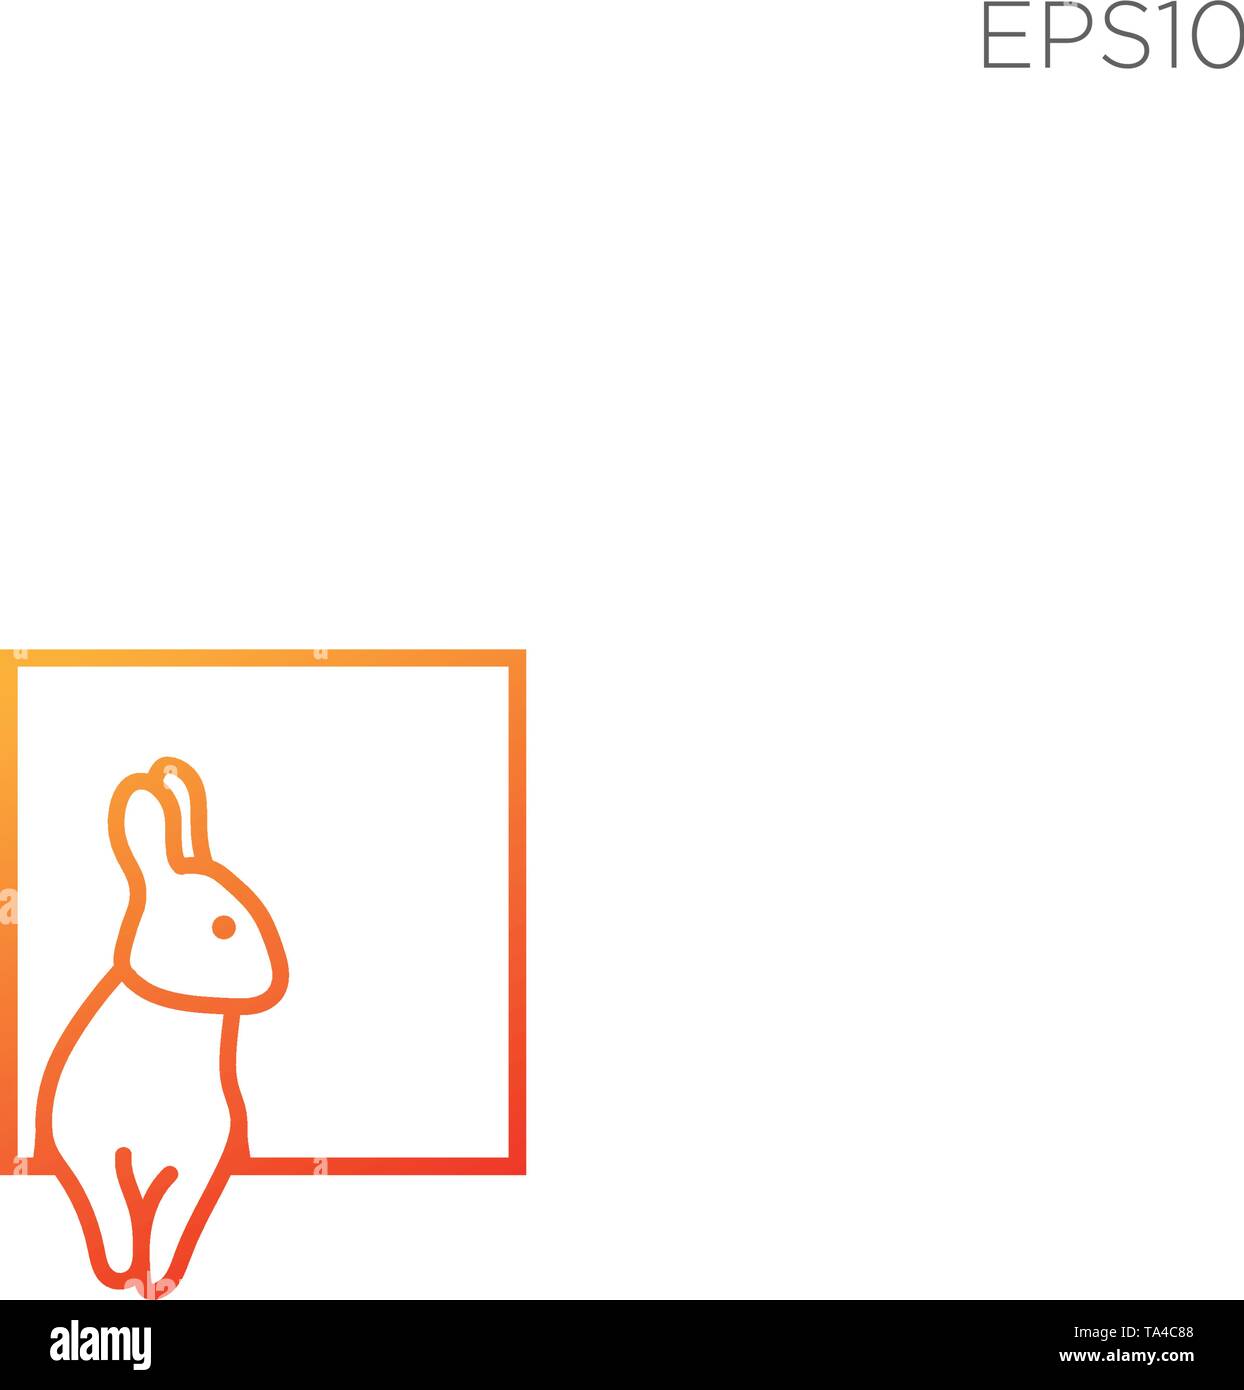 rabbit bunny logo or symbol vector illustration - vector Stock Vector